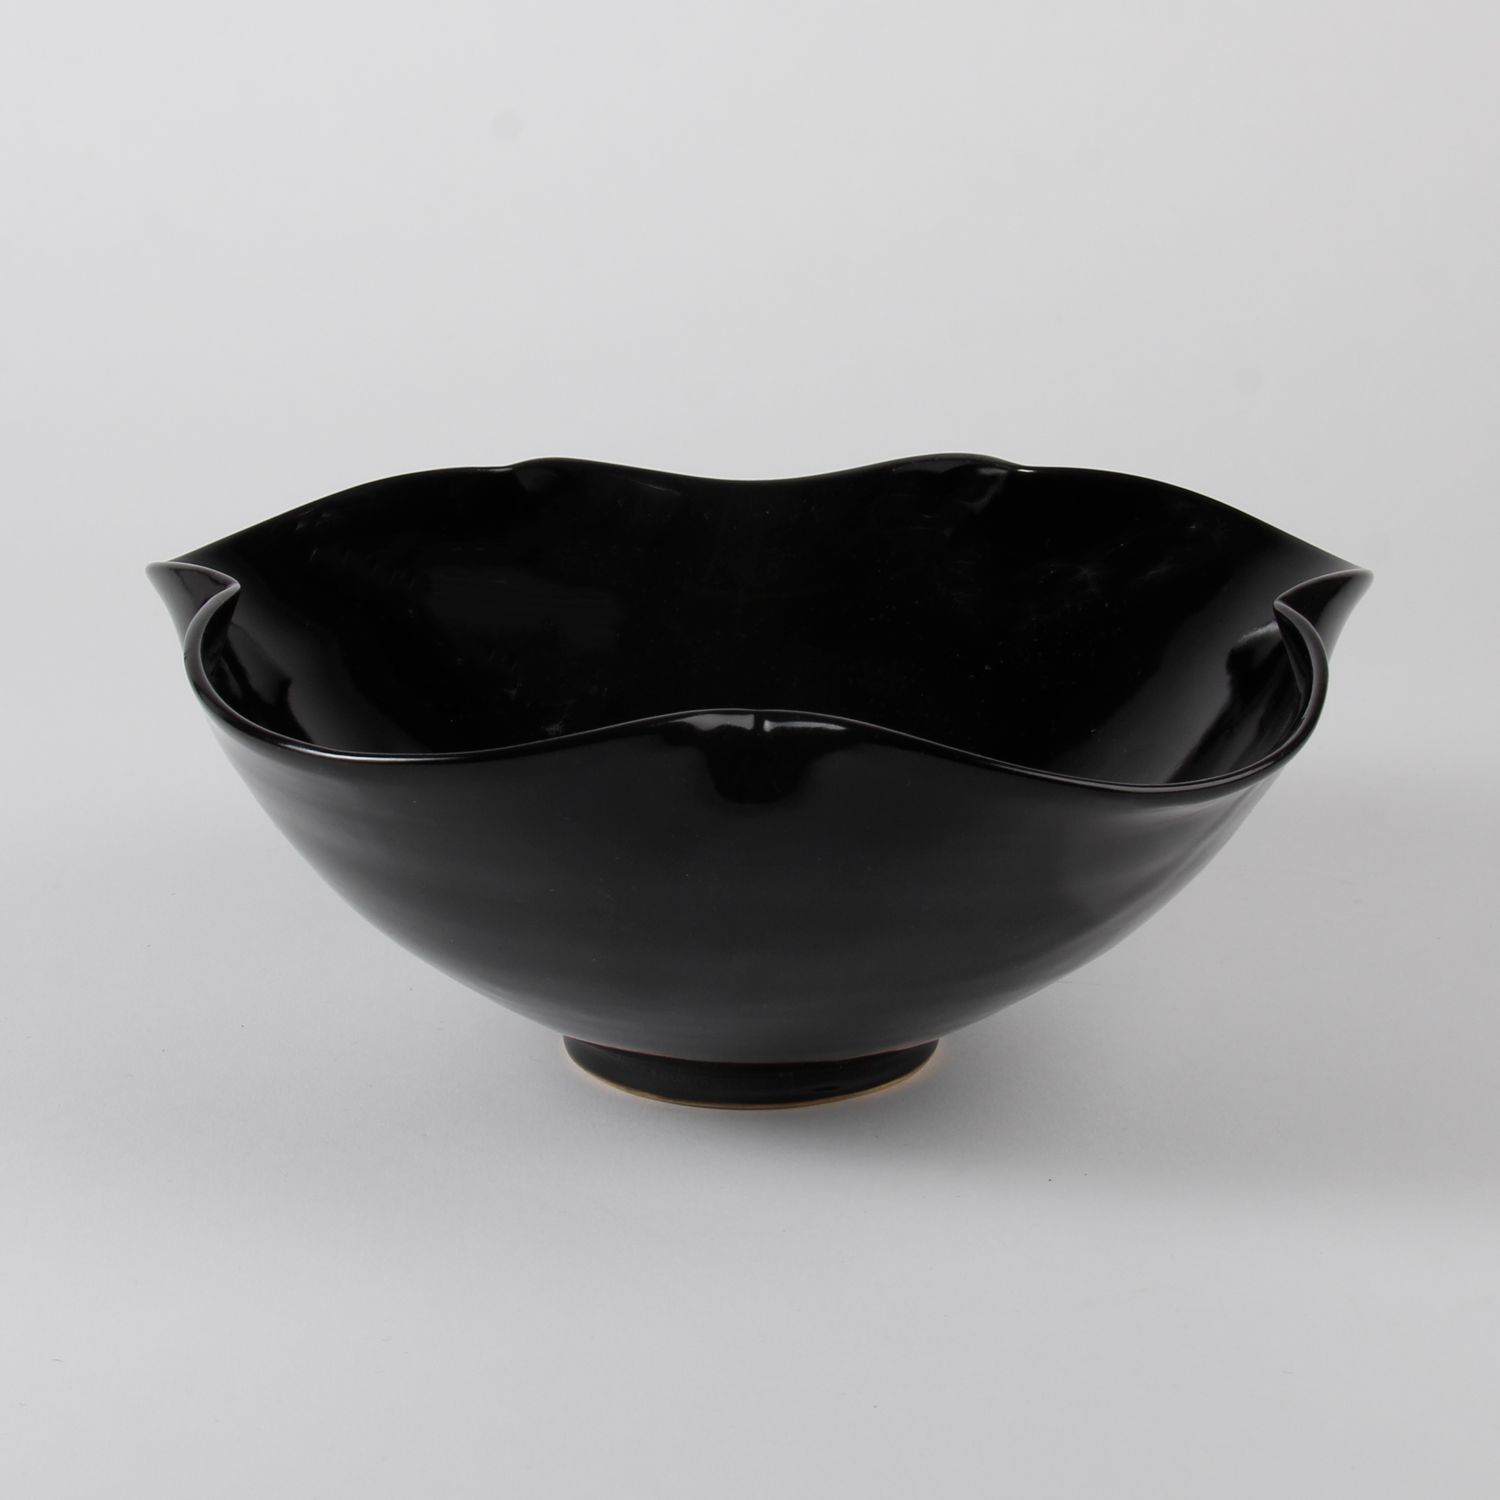 Natalie Waddell: Medium Black Footed Bowl Product Image 5 of 5